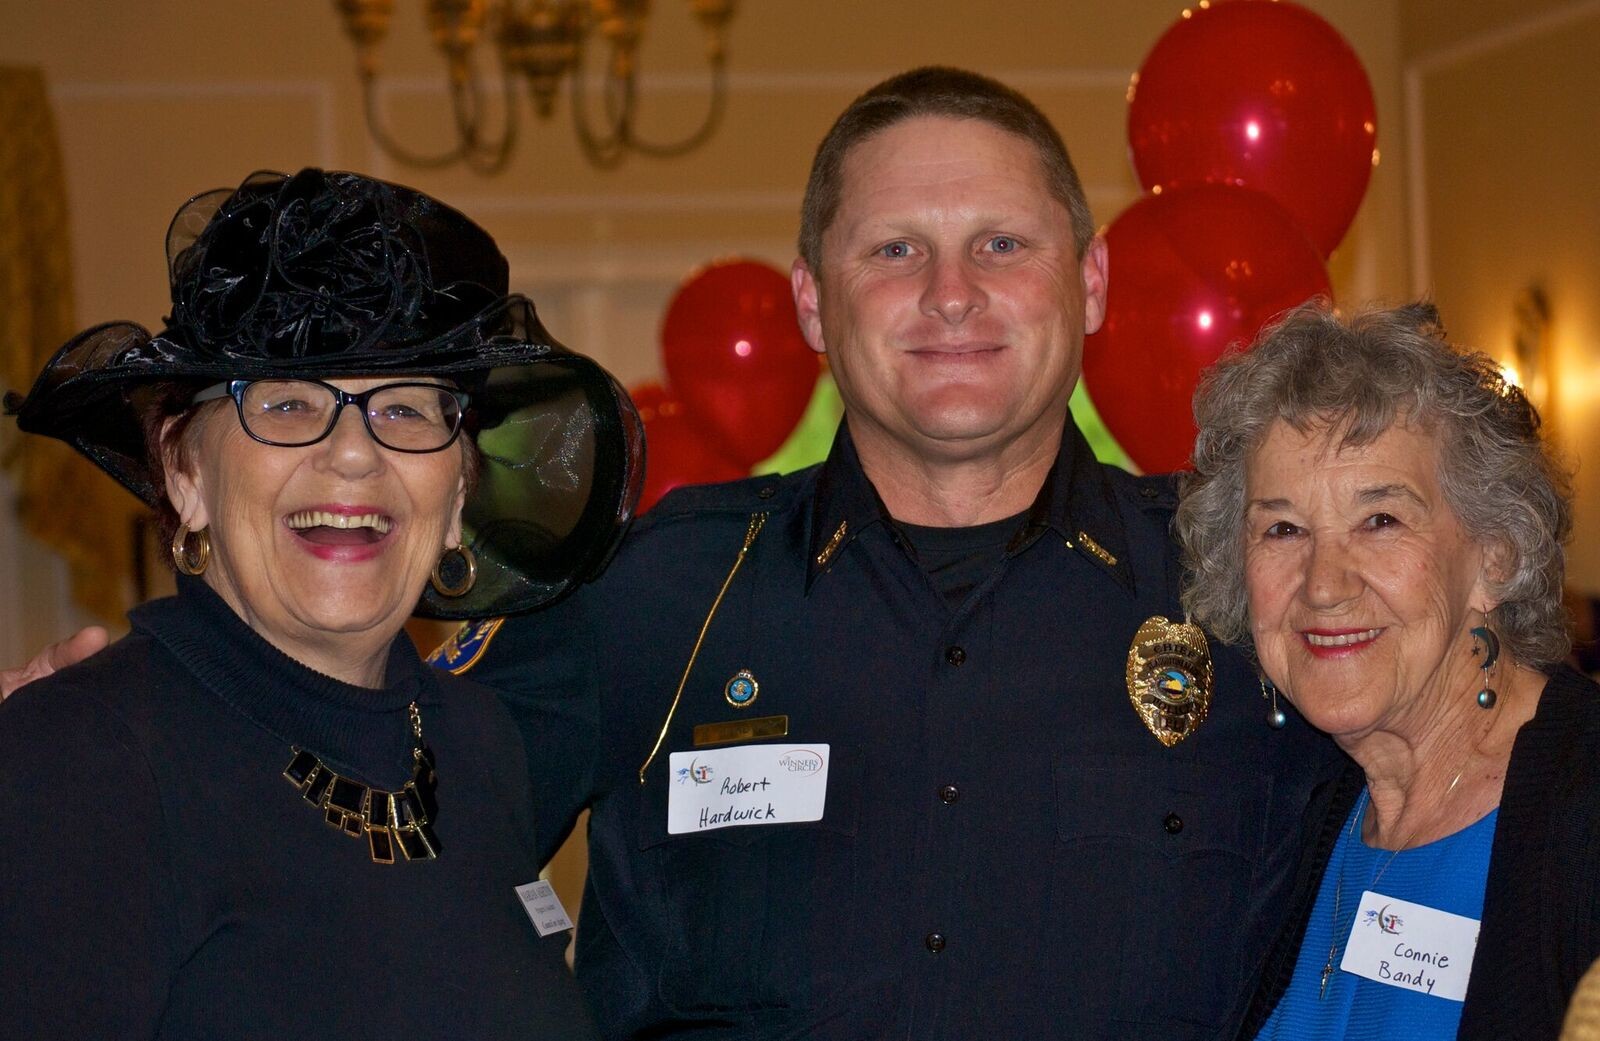 Marian Ashton, St. Augustine Beach Police Chief Robert Hardwick and Connie Bandy